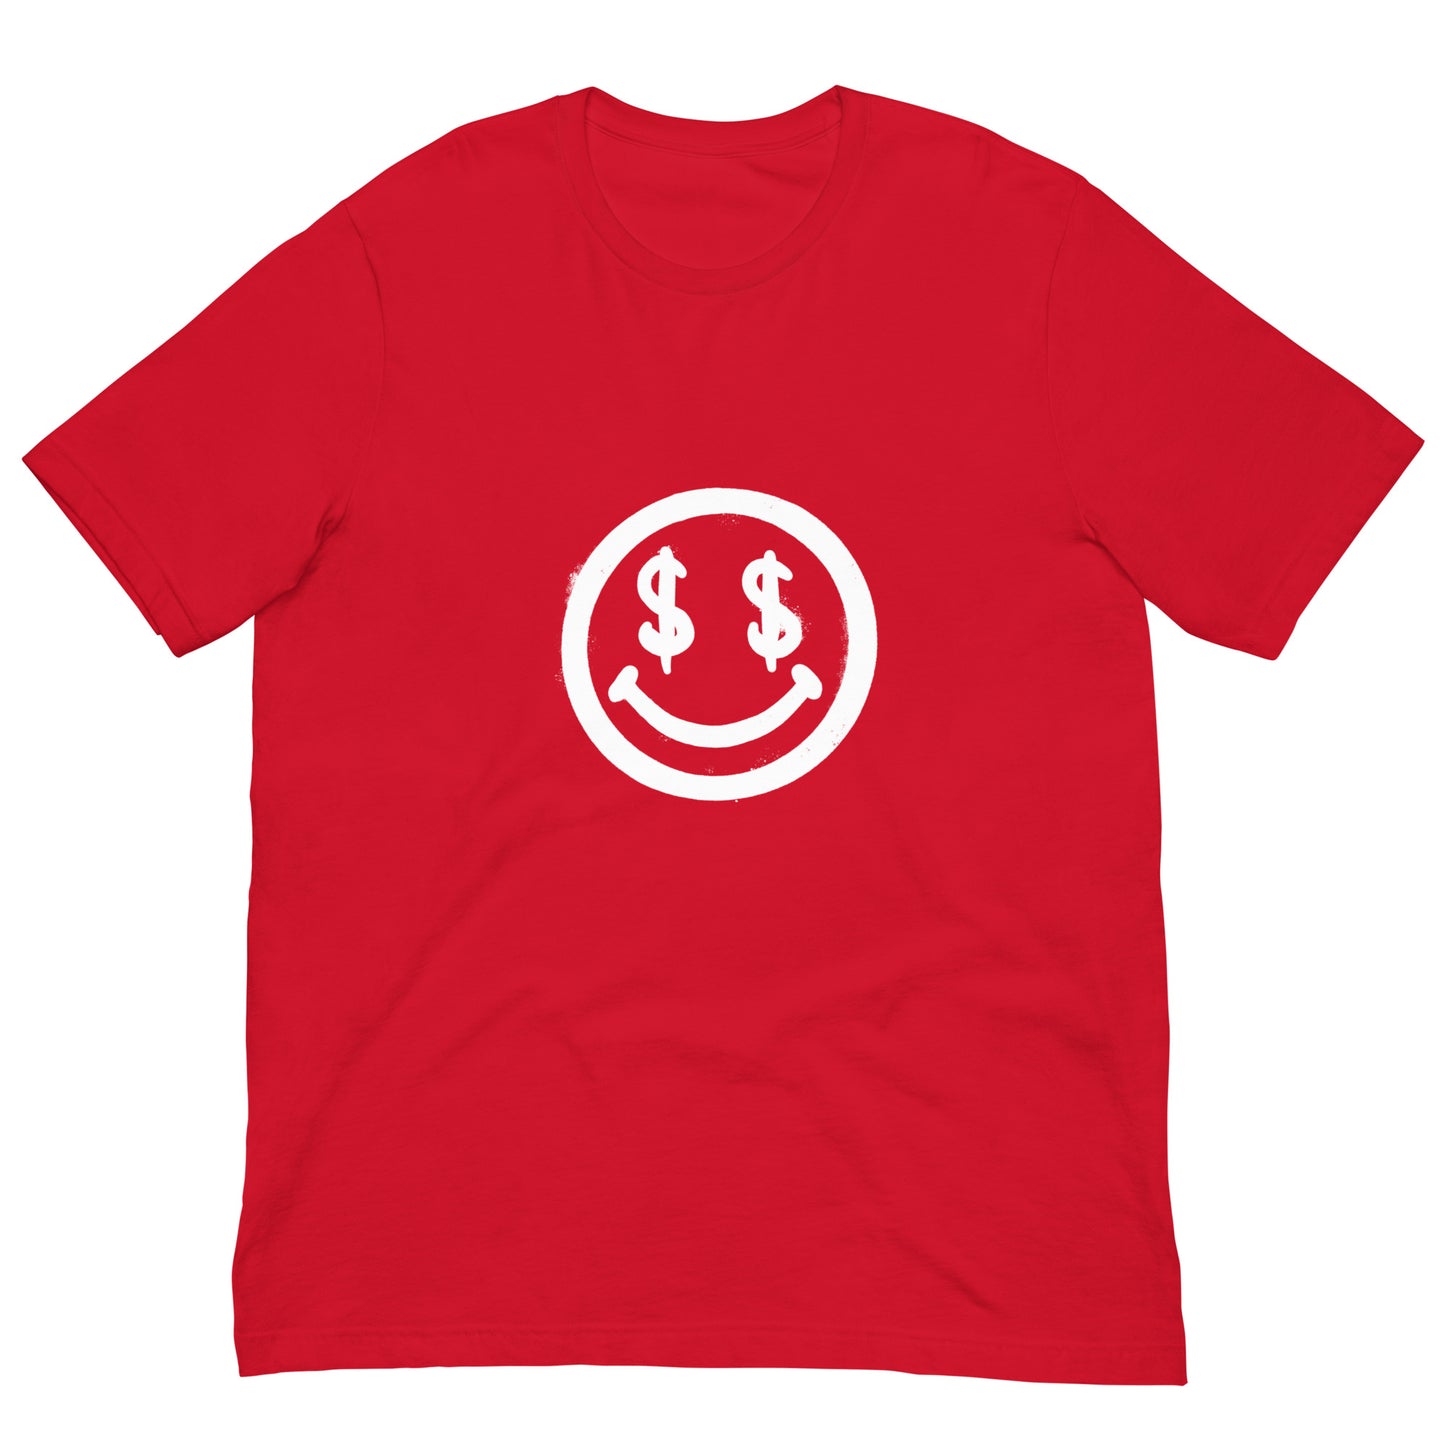 $5k Milestone T-Shirt